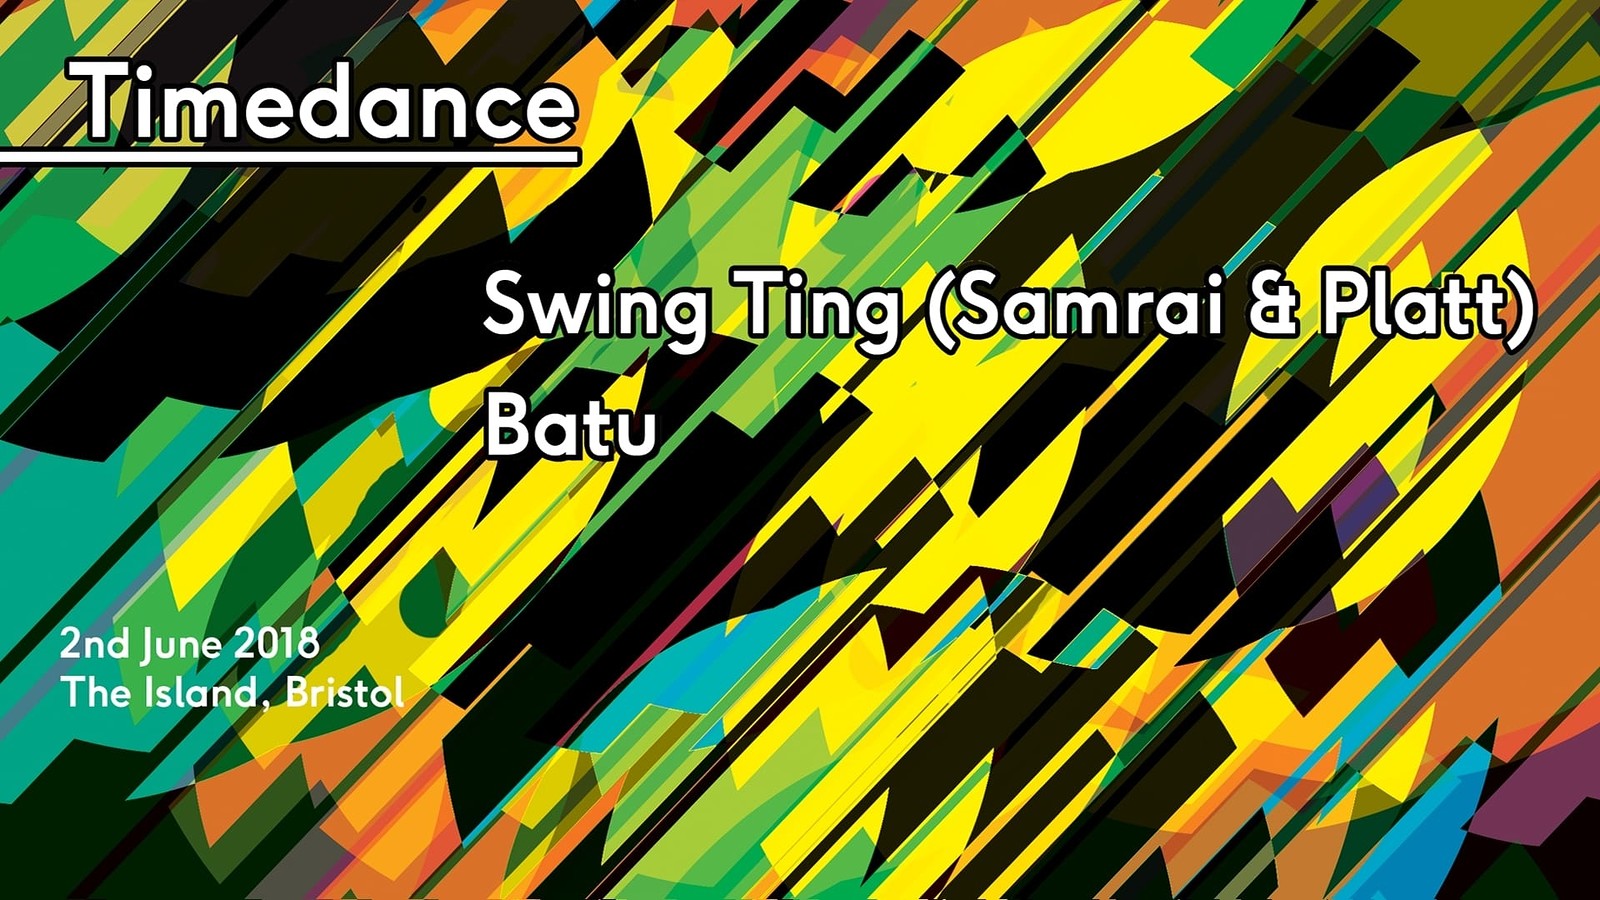 Timedance - Swing Ting, Batu at The Island